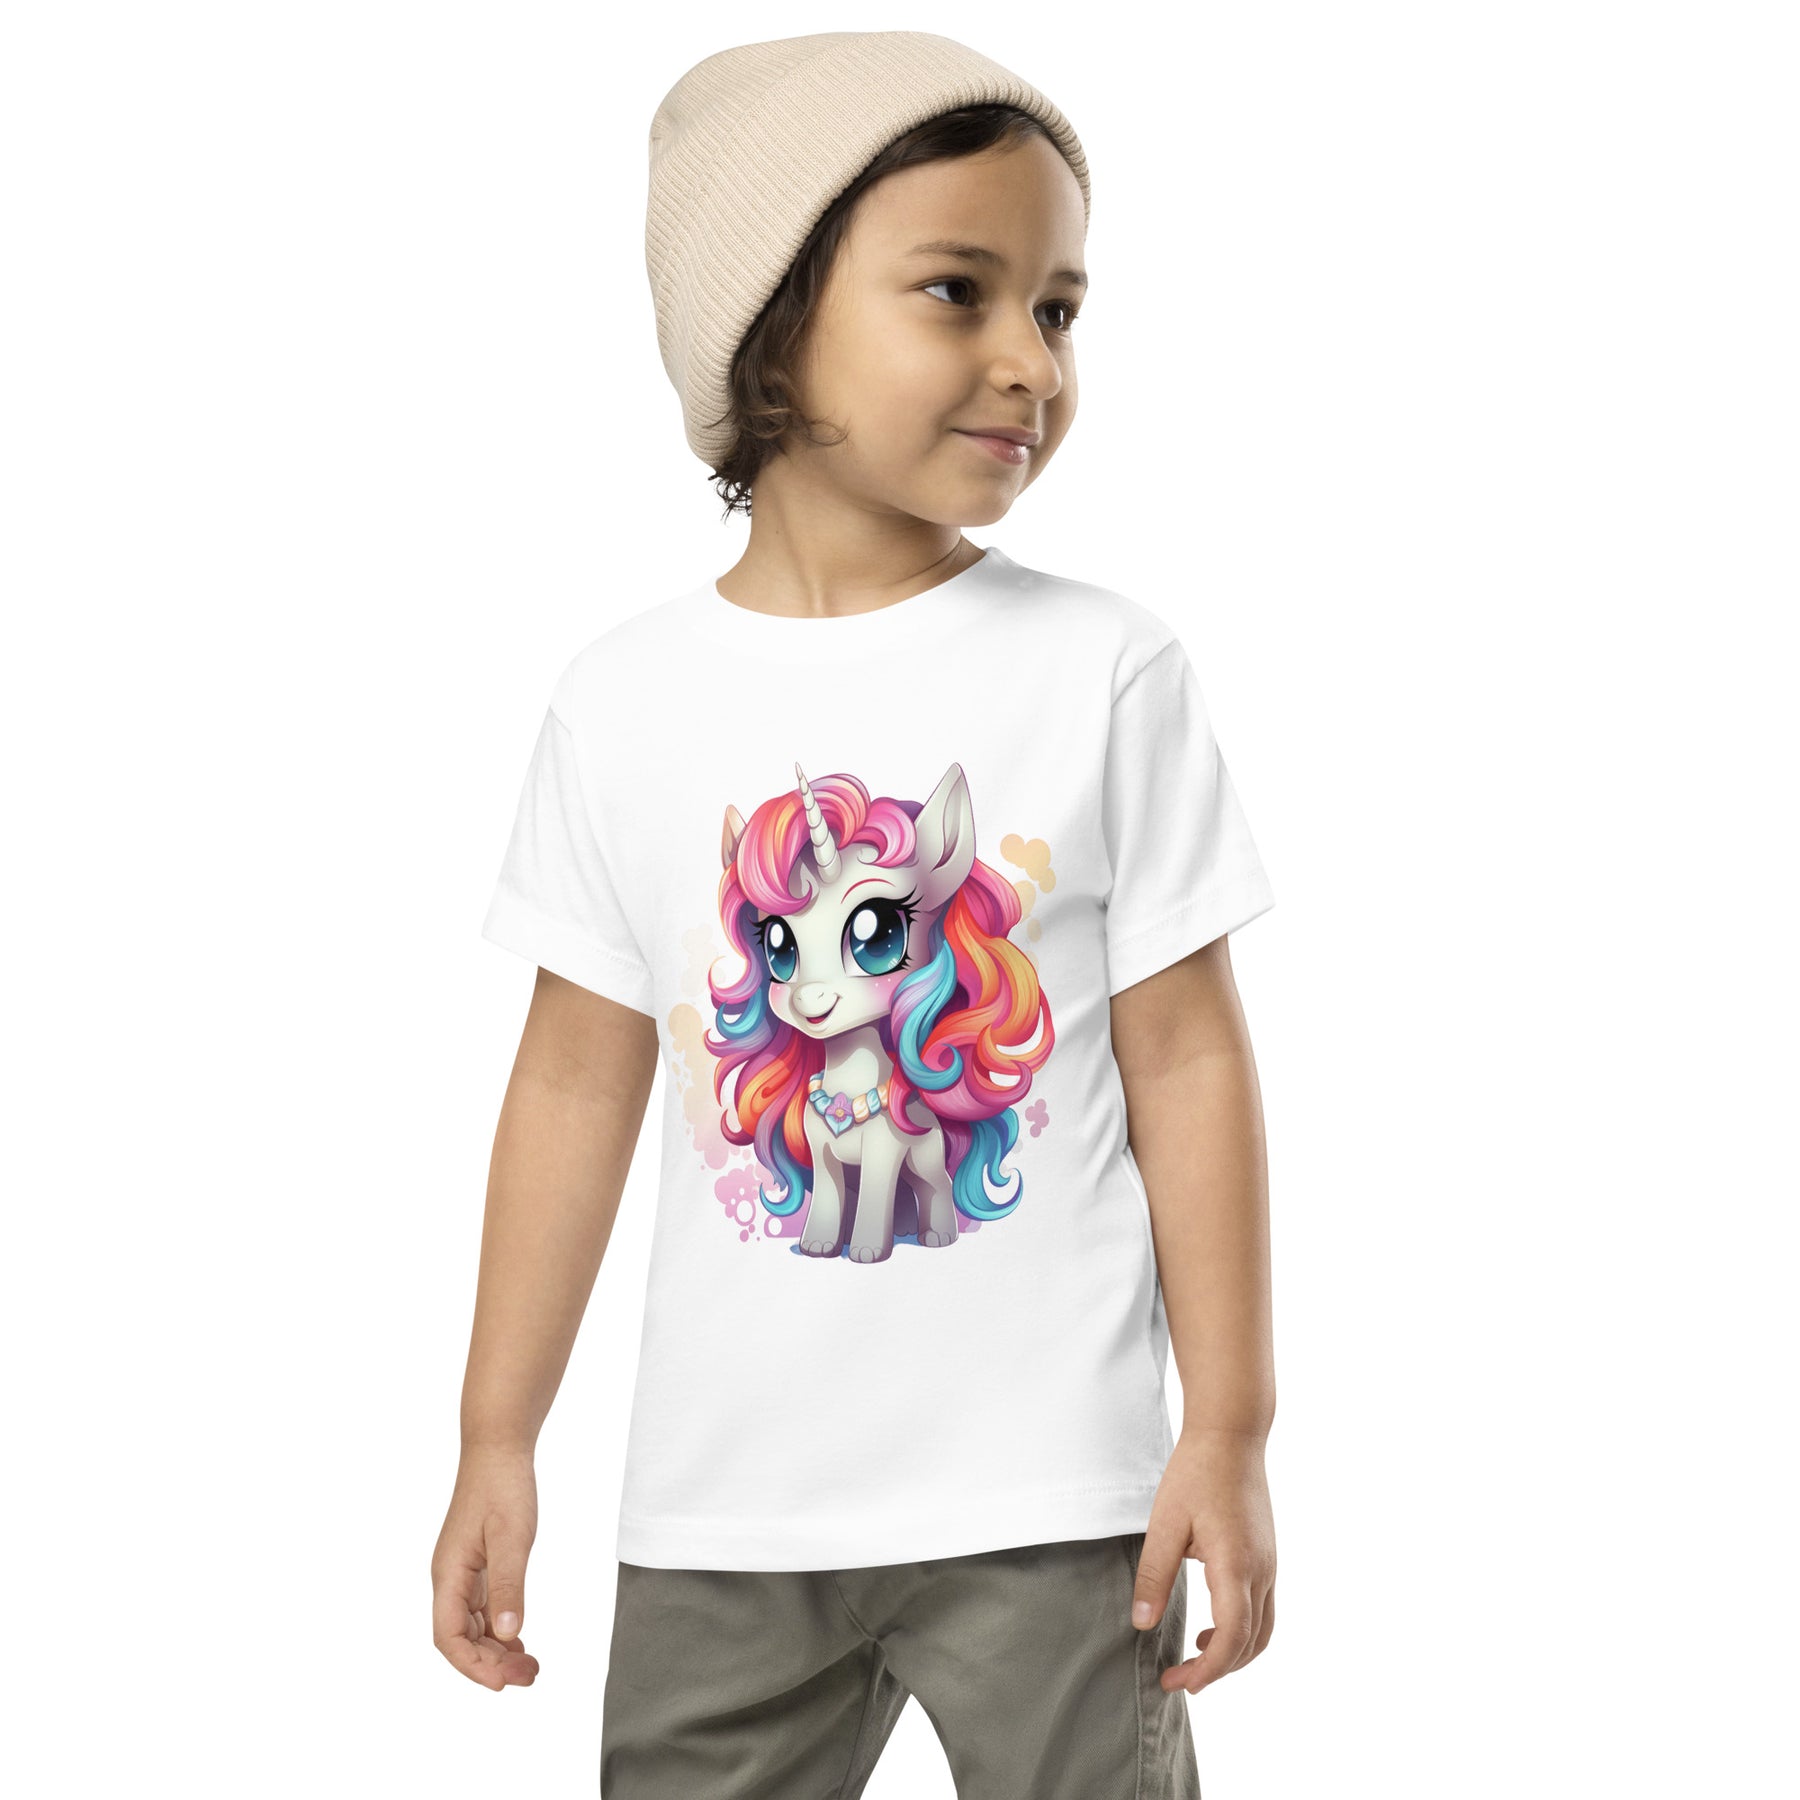 Cute Unicorn | Toddler Short Sleeve Tee